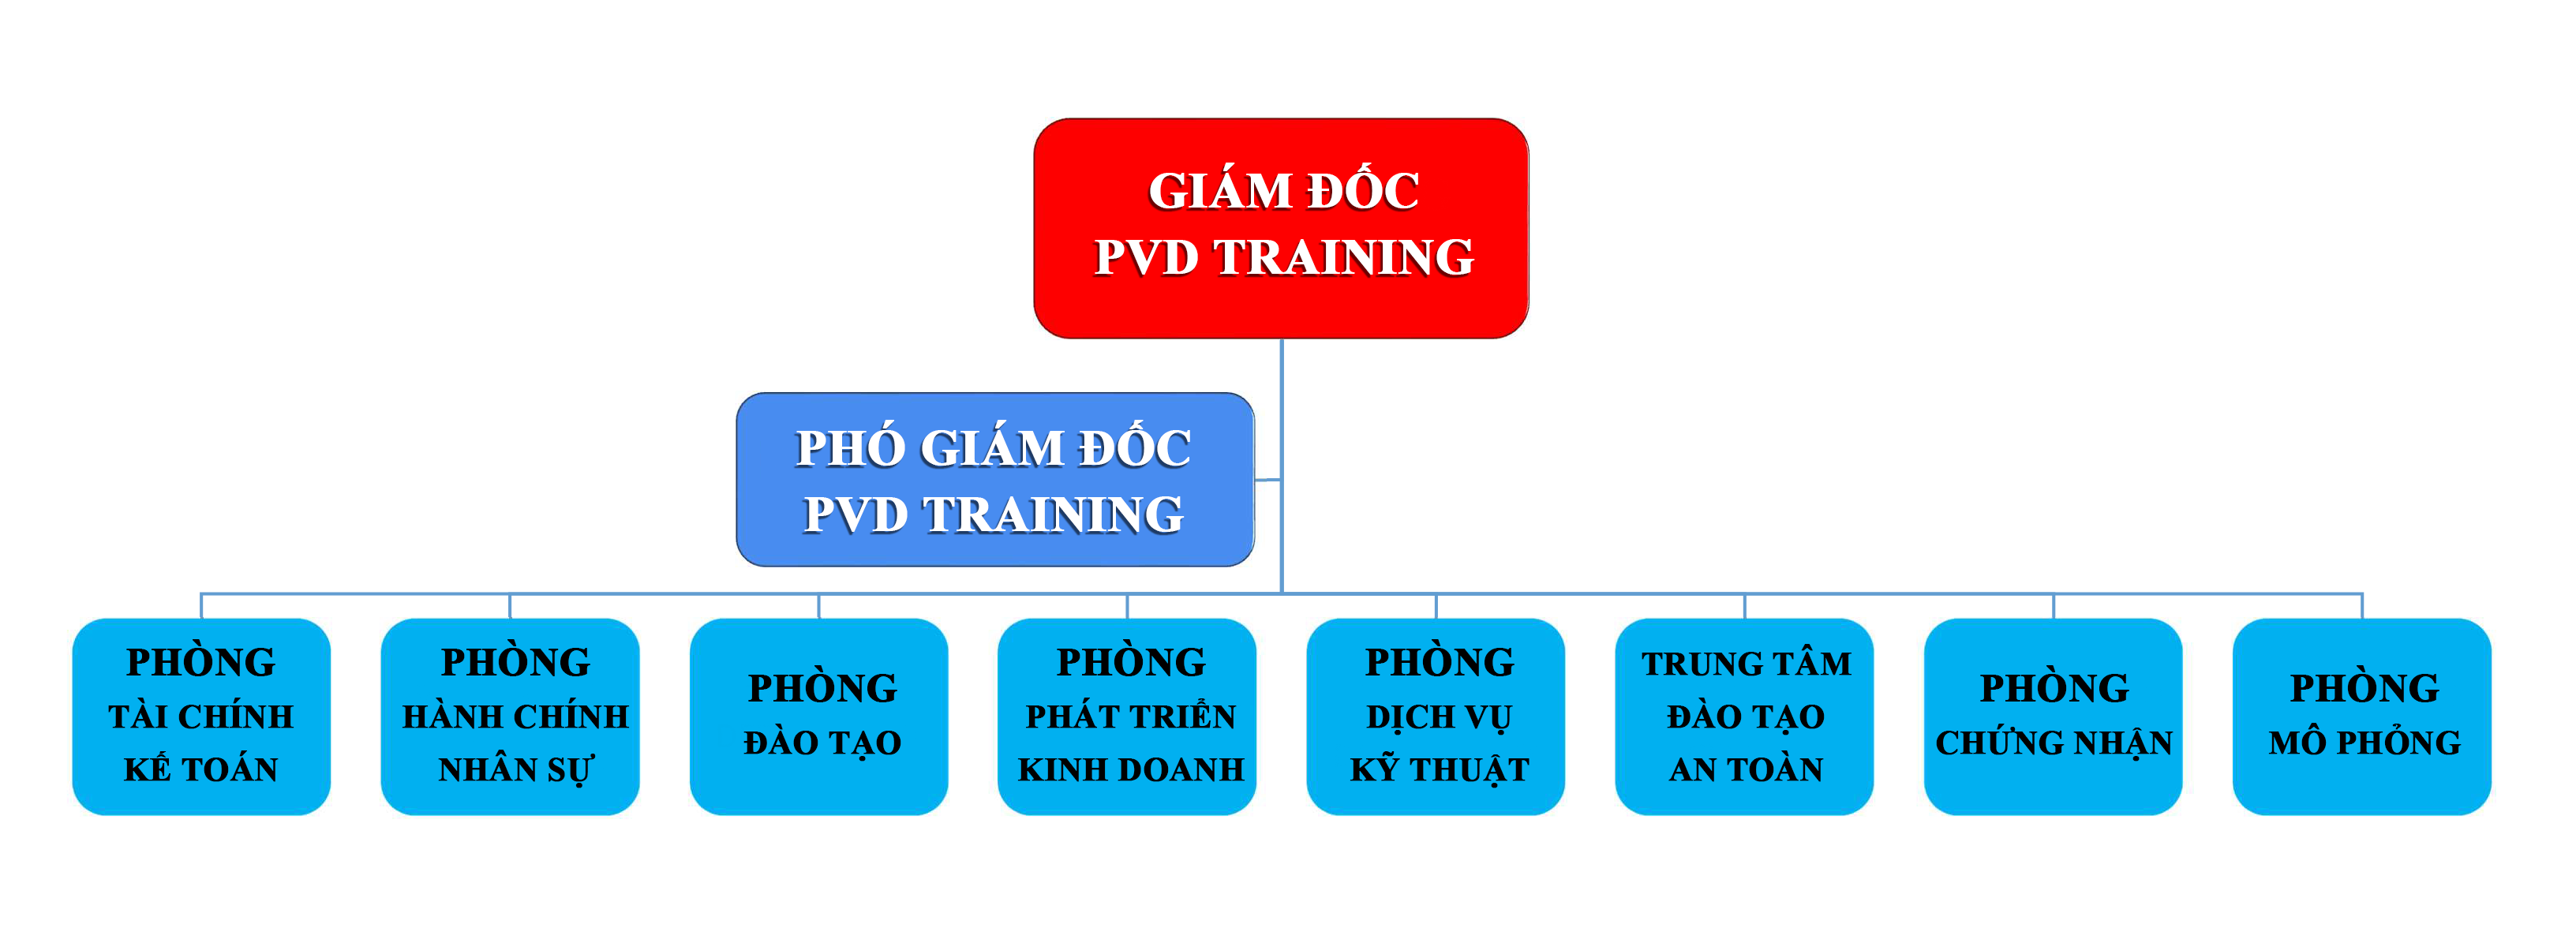 PVD Organisation Chart VI